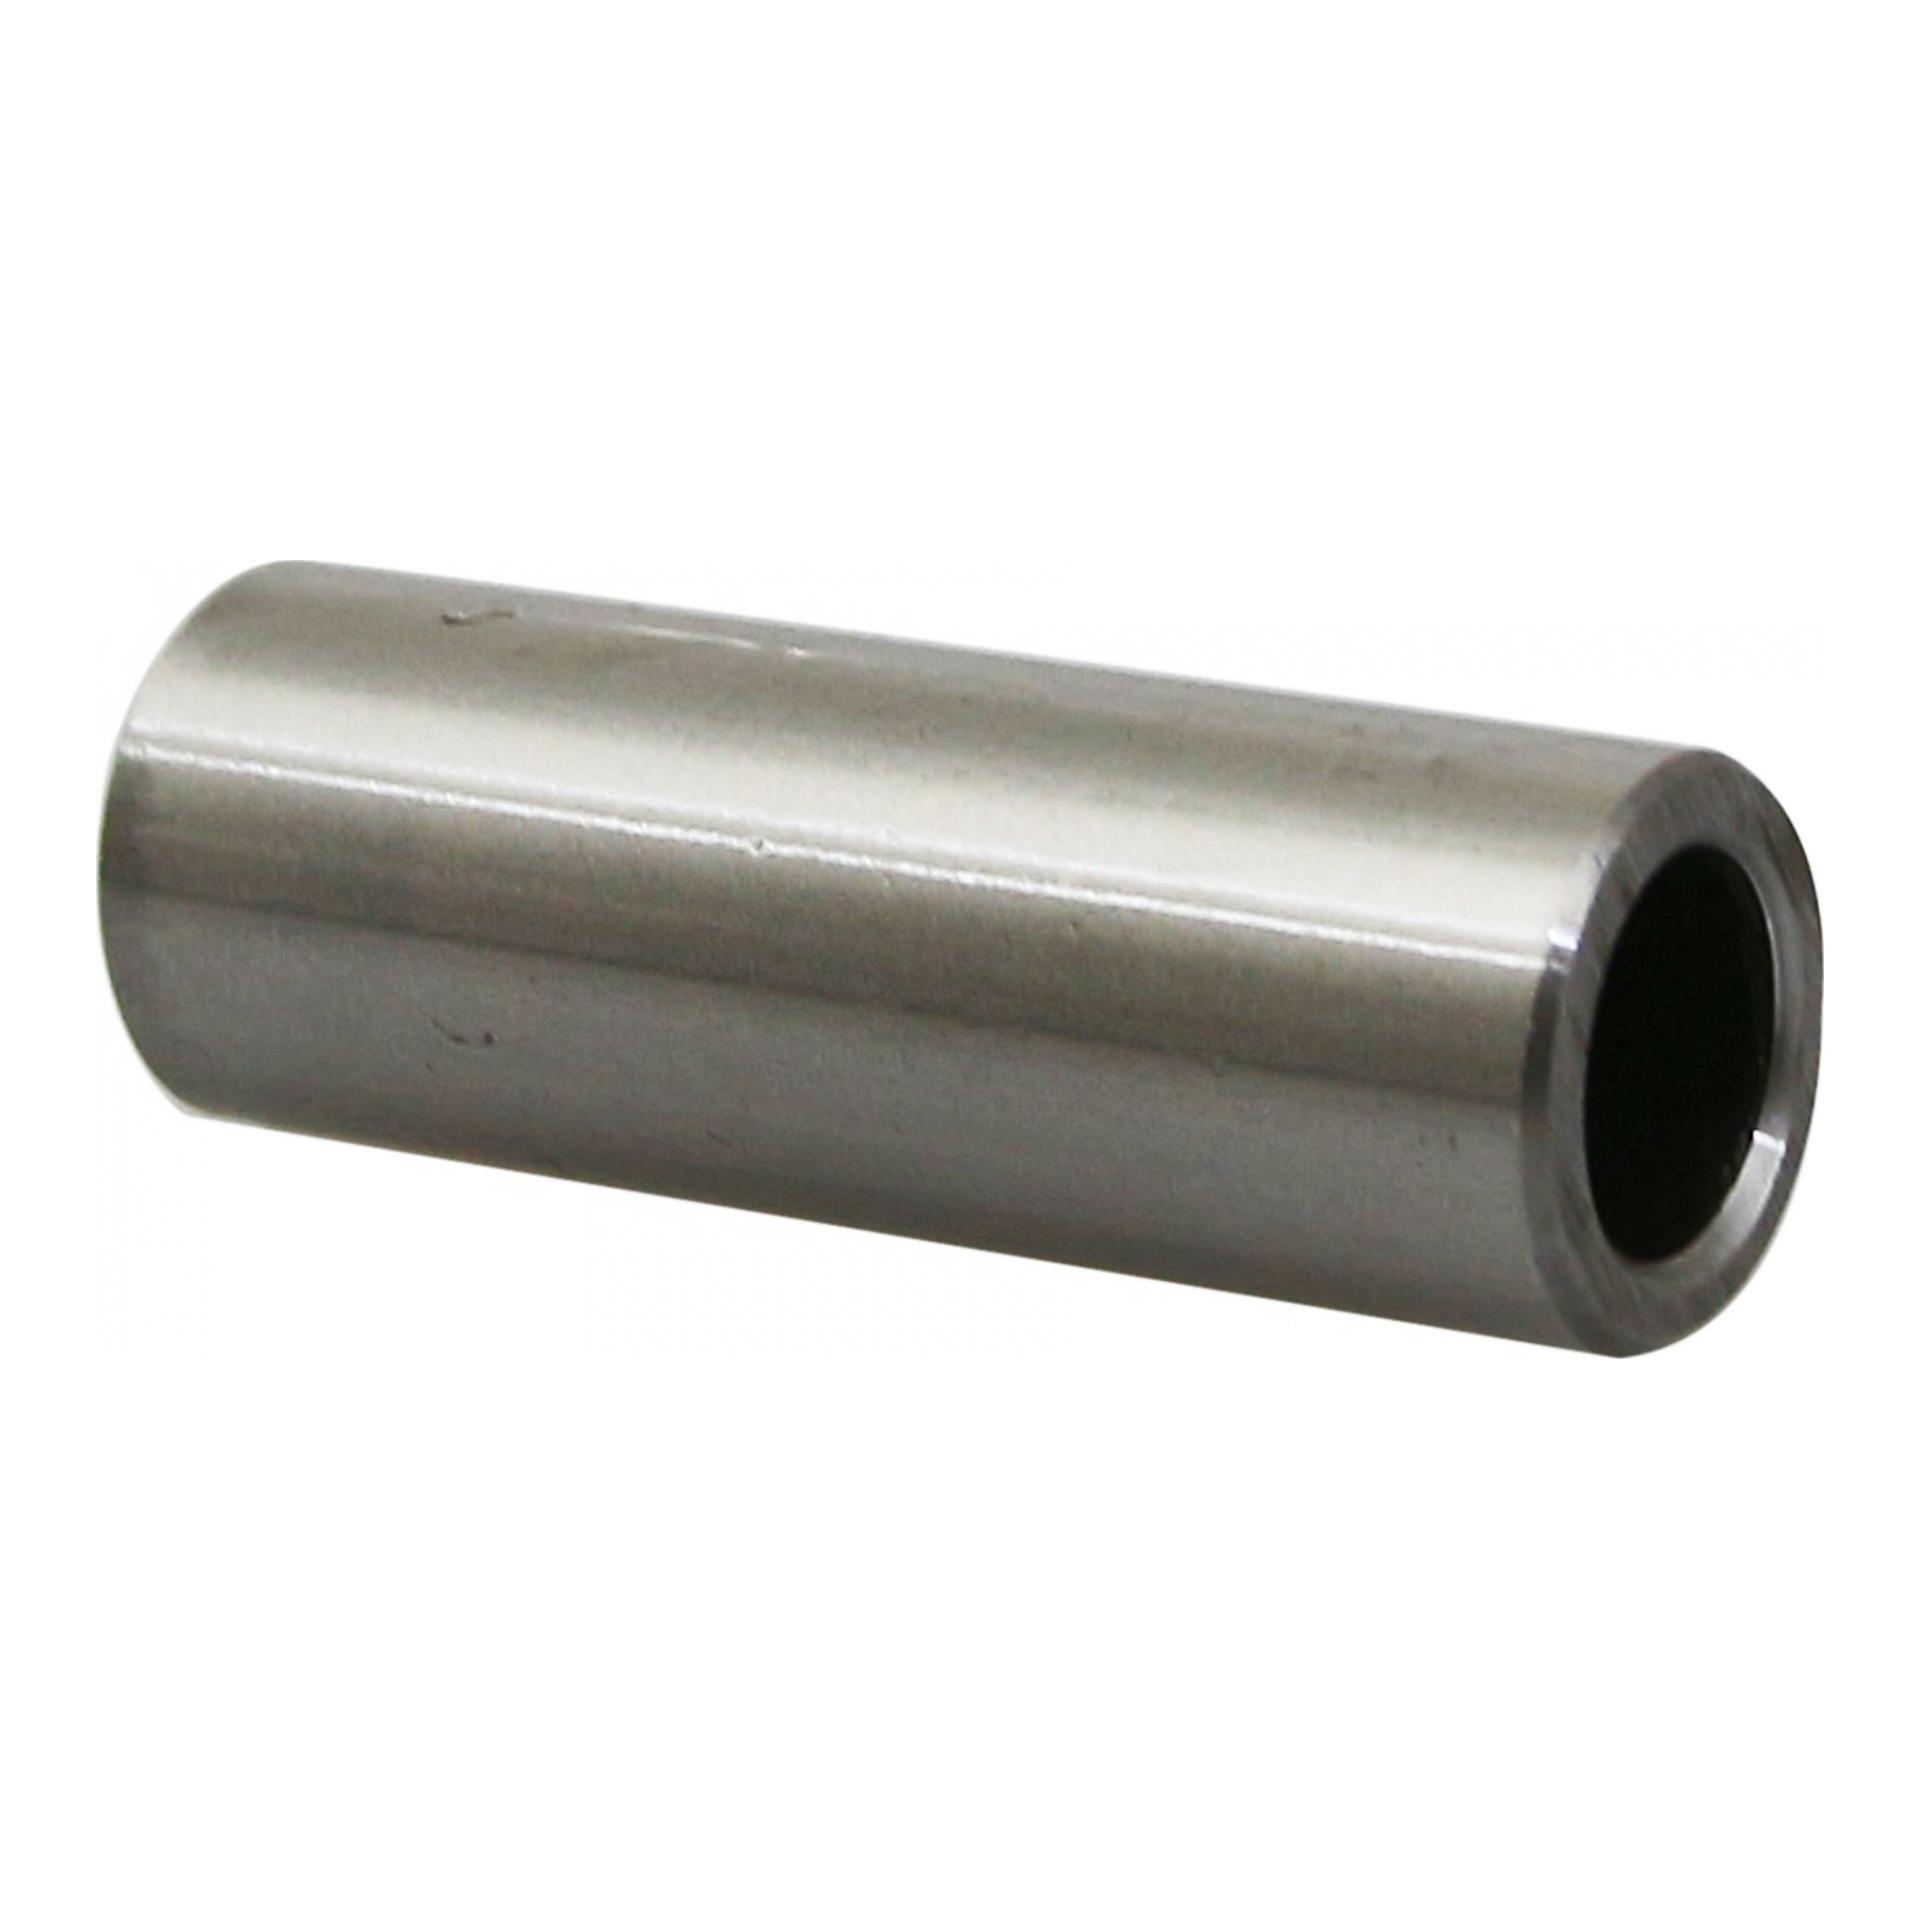 Piston complet type origine cote origine 52,5 mm - (piston - axe